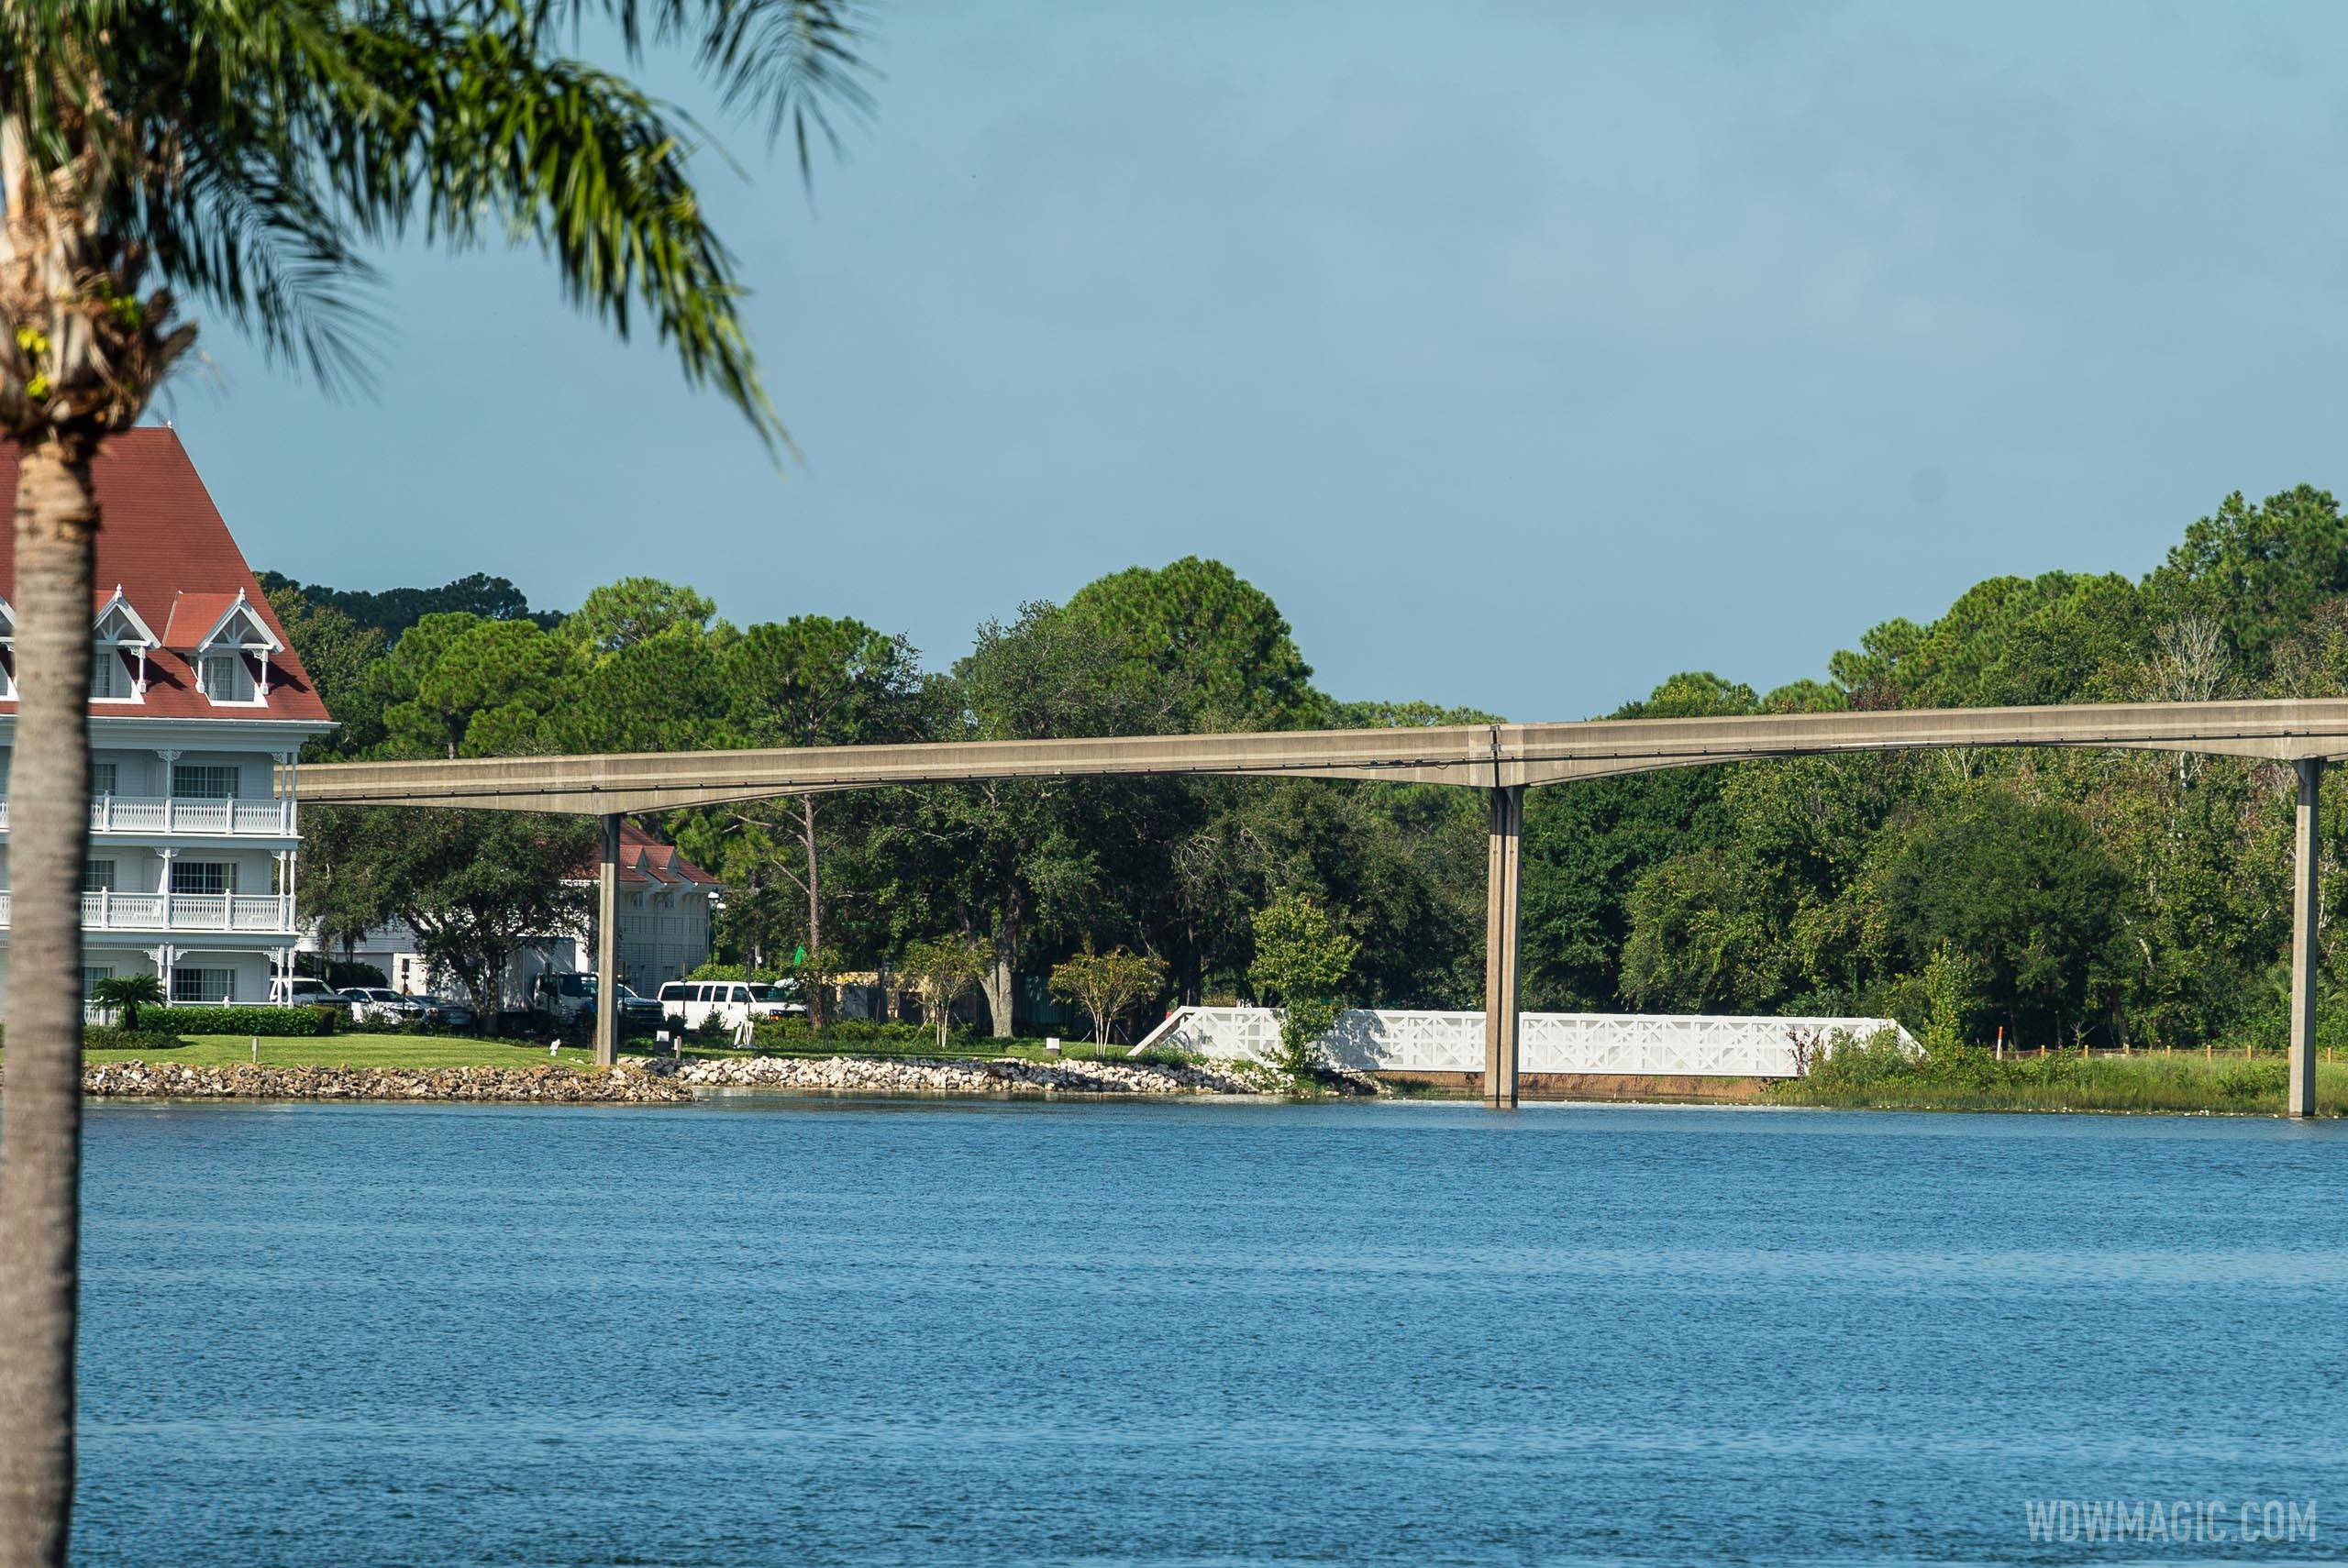 Grand Floridian to Magic Kingdom bridge construction - September 3 2020